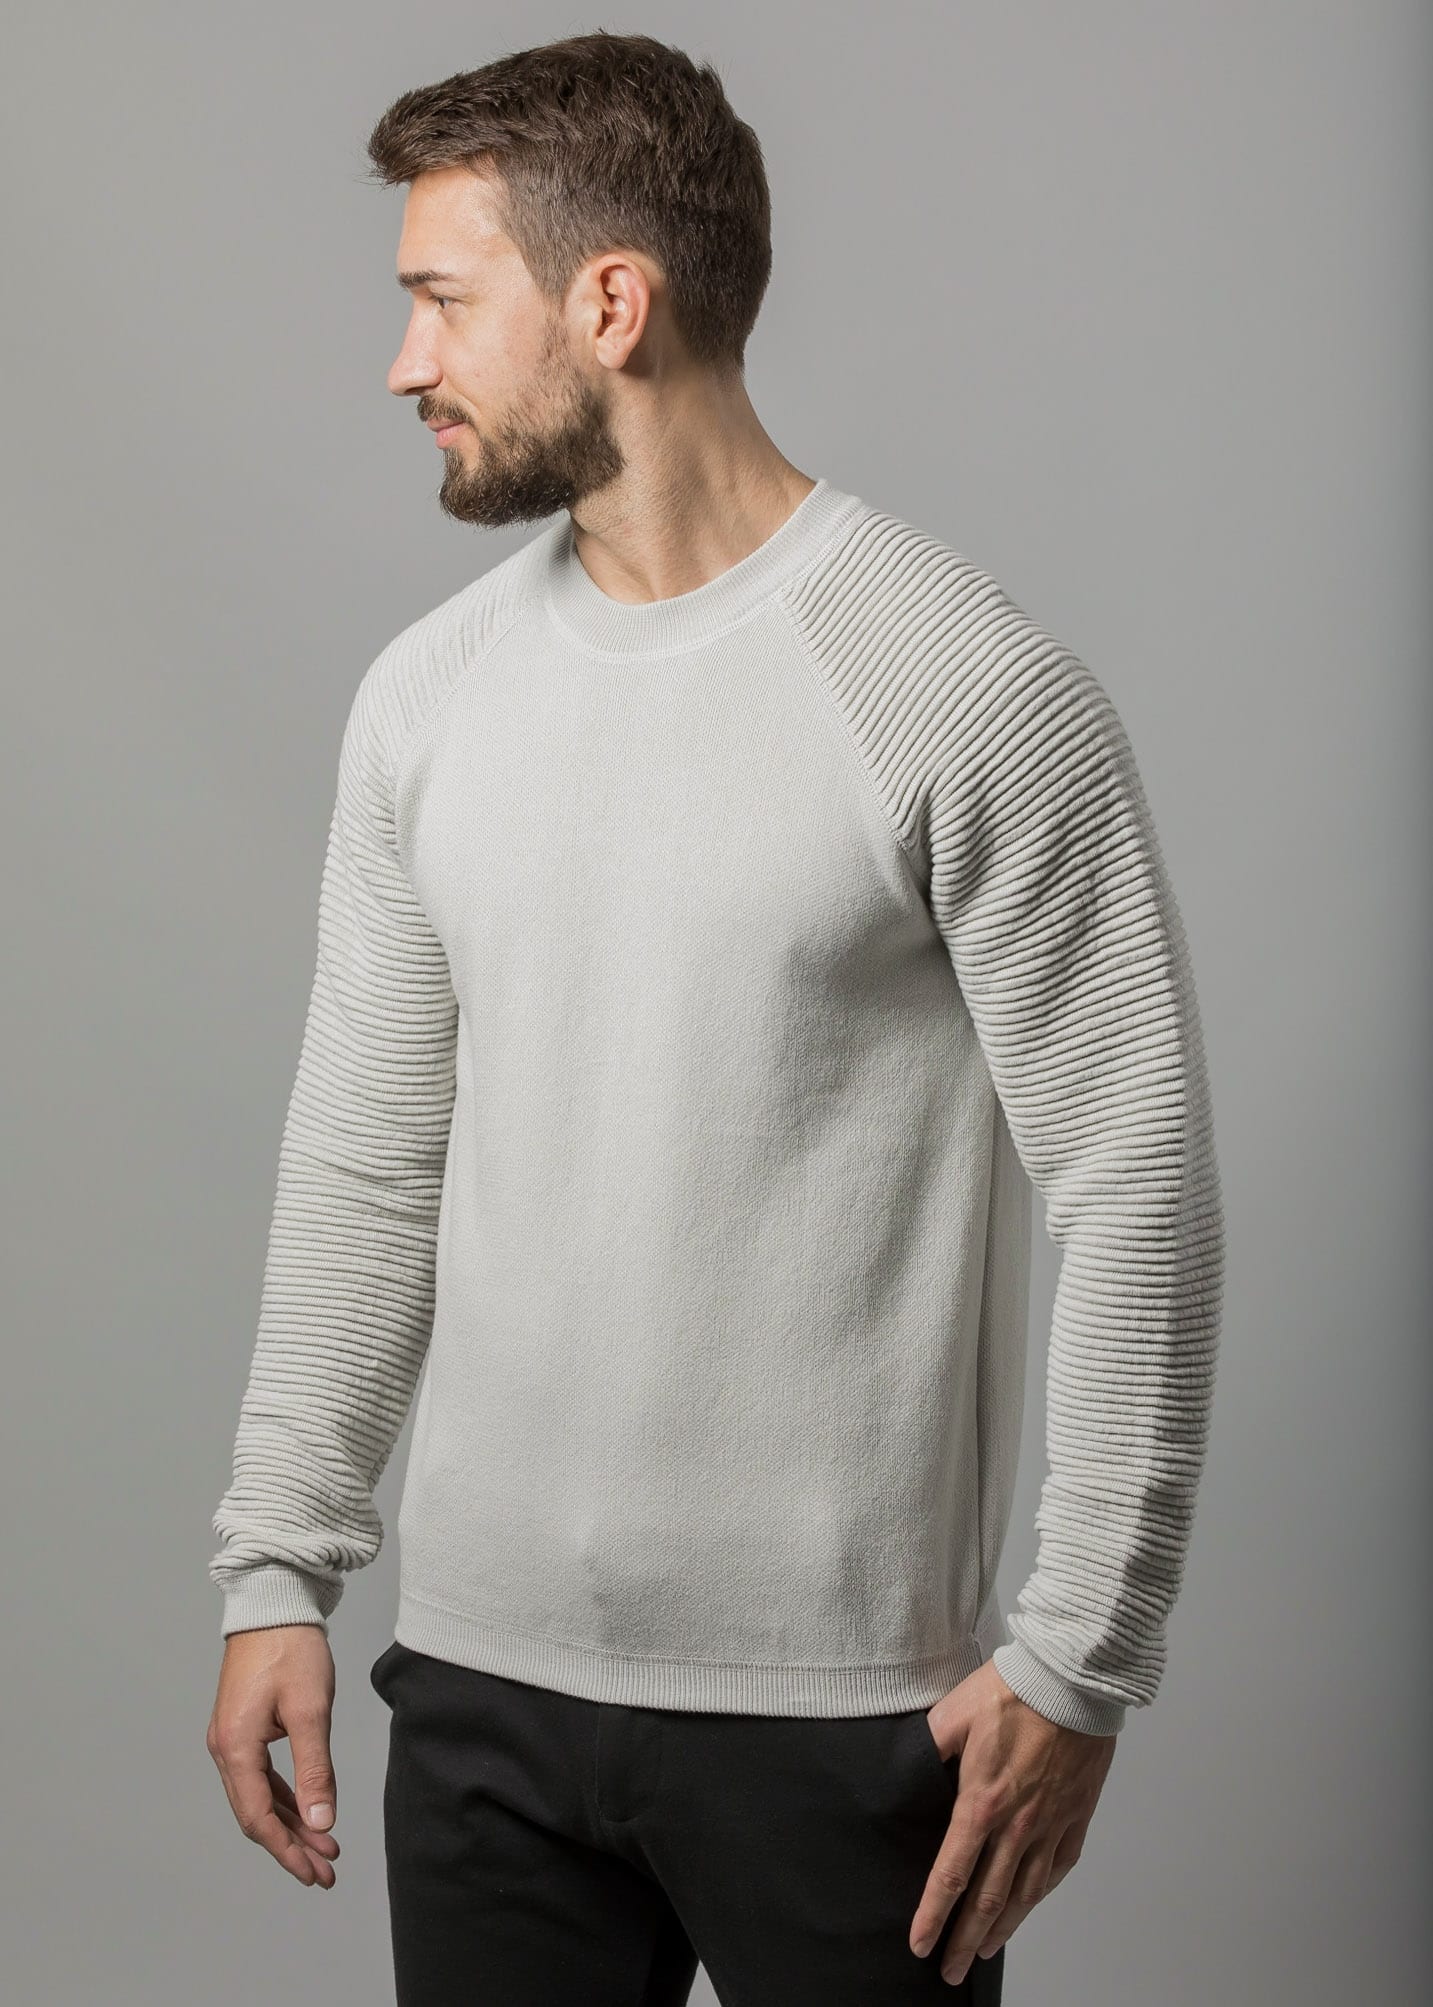 Baumwolle Pullover Herren Damir Connemara | Made in EU